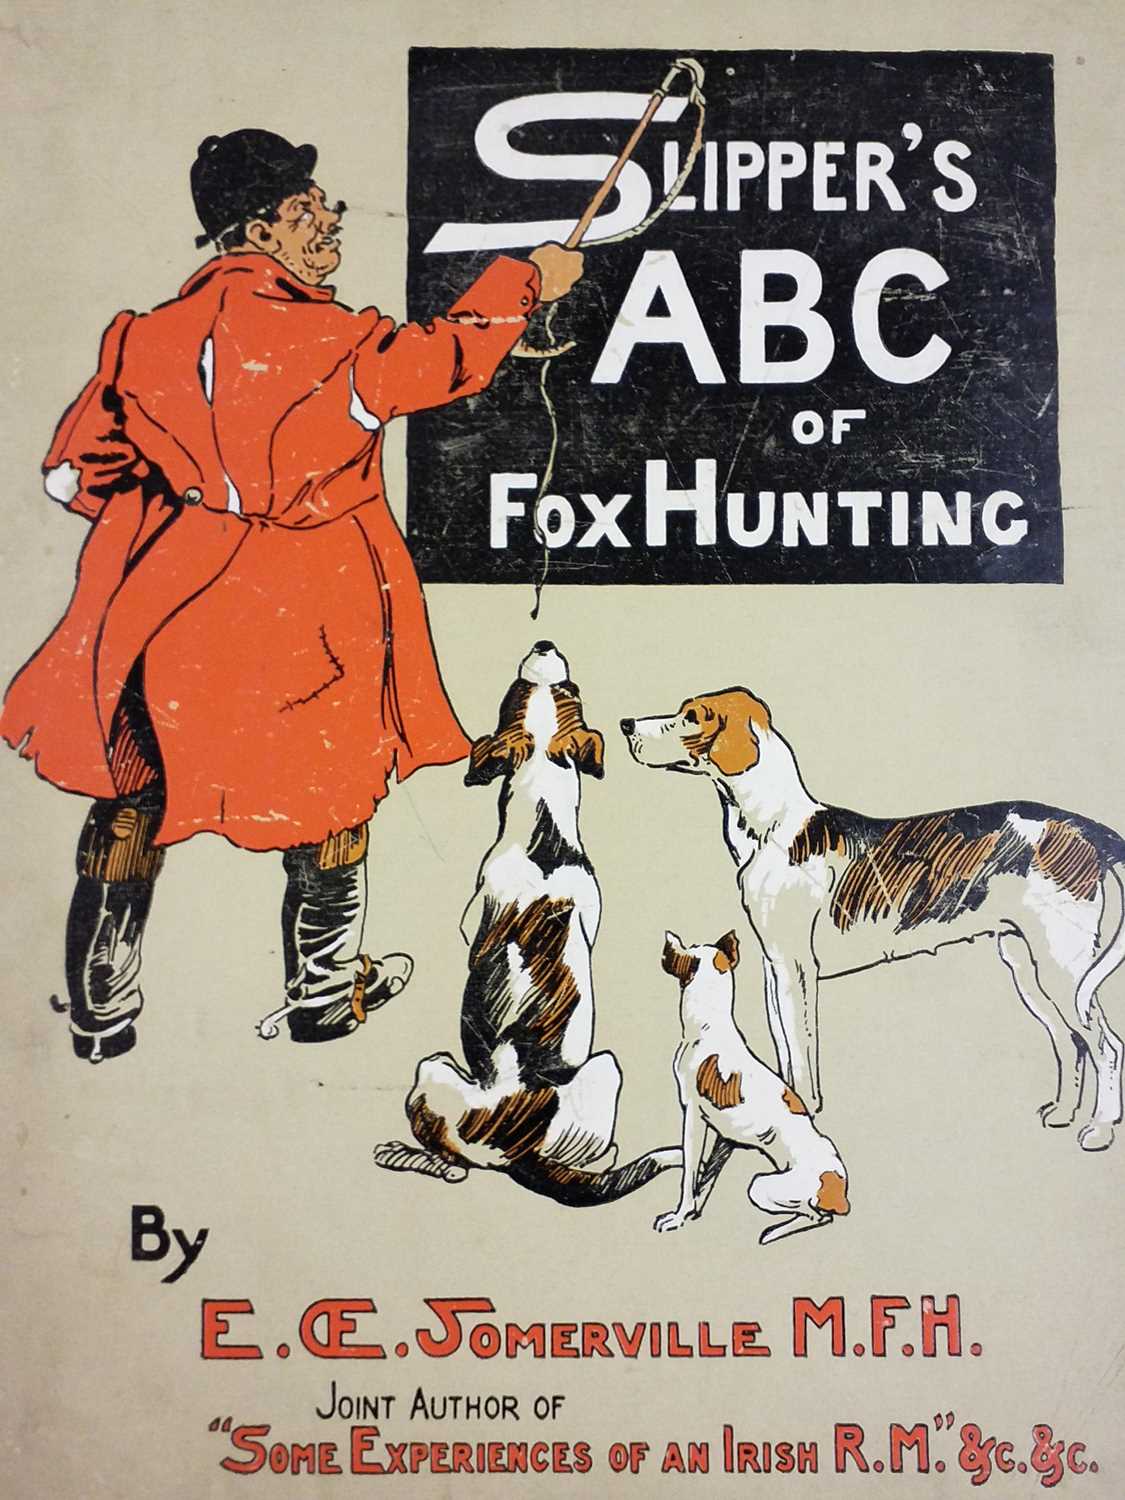 Lot 89 - Somerville (E. OE.). Slipper's ABC of Fox Hunting, Longmans, Green, and Co, 1903